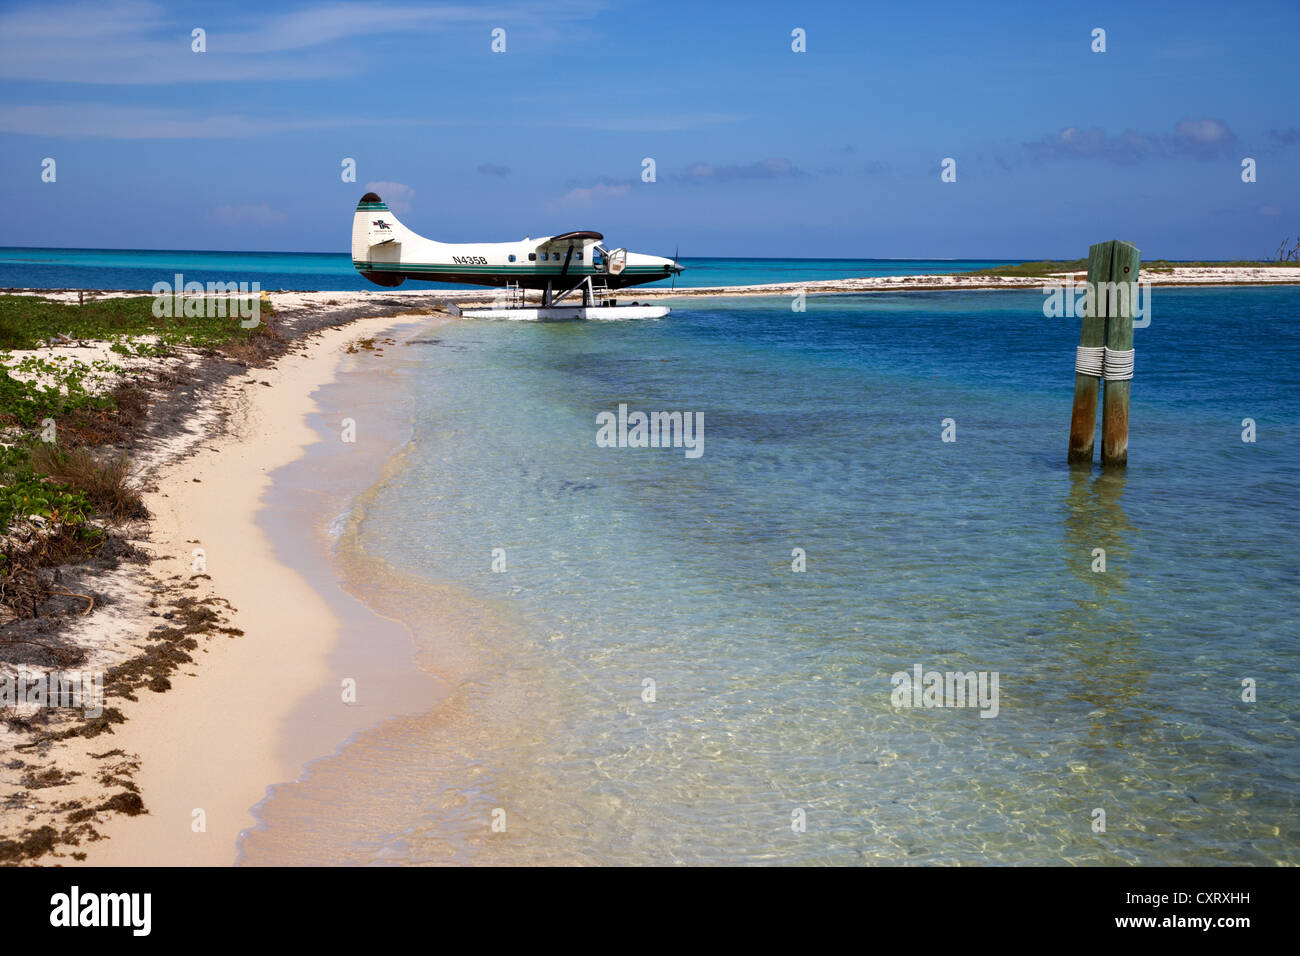 DeHAVILAND Dhc-3 Otter Wasserflugzeug am Strand an der Dry-Tortugas-Florida Keys-usa Stockfoto